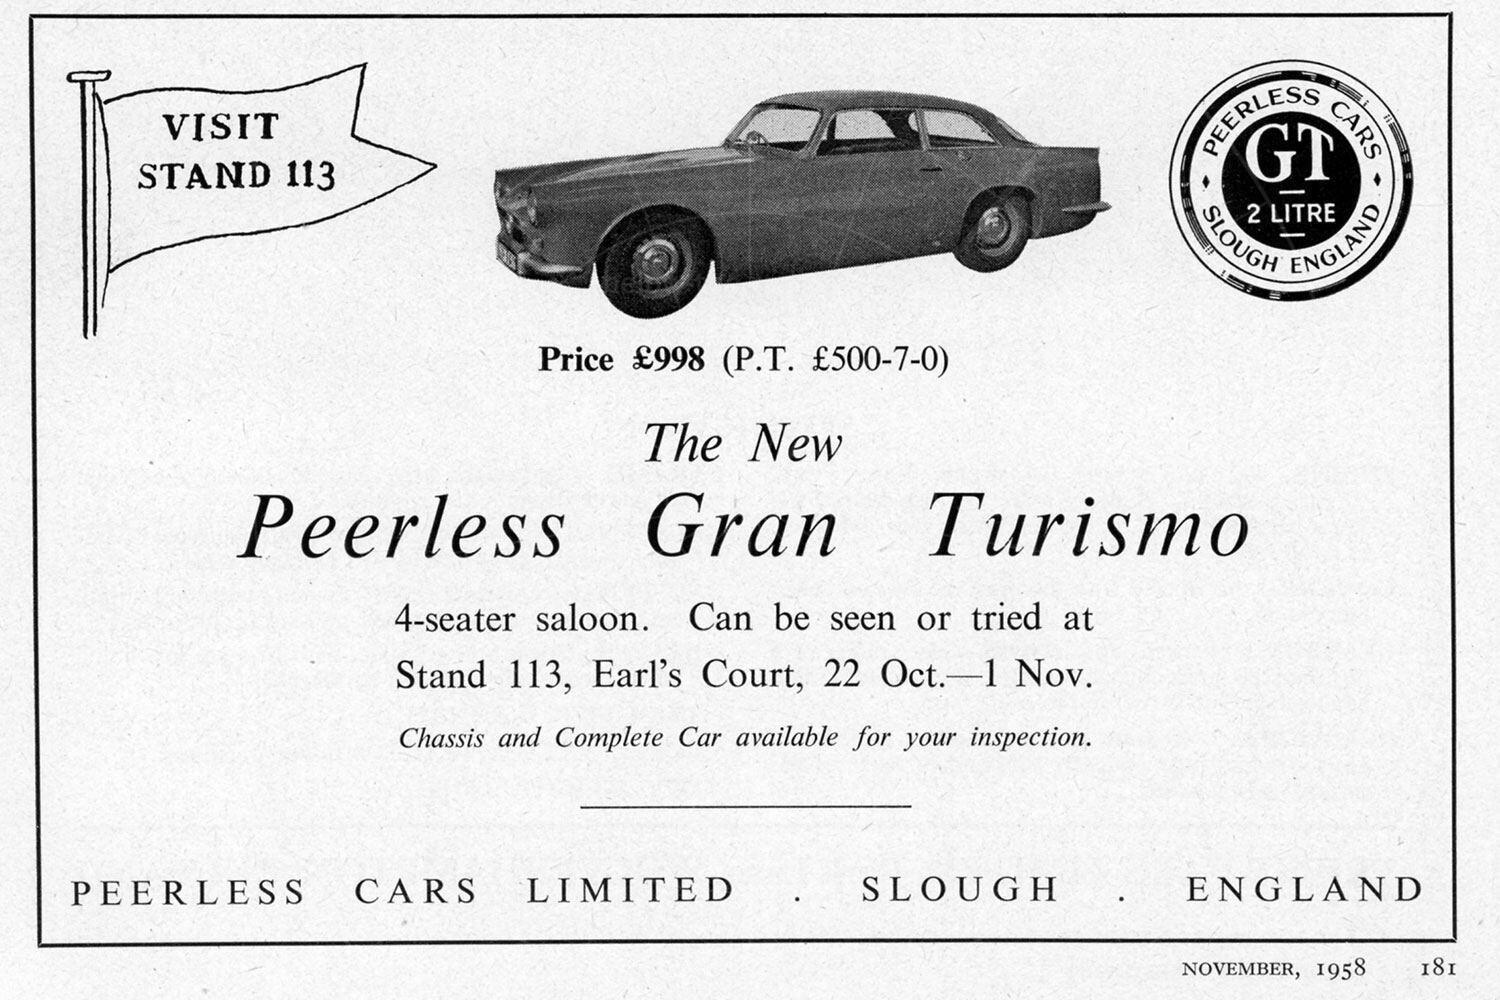 Peerless GT advert Pic: magiccarpics.co.uk | Peerless GT advert